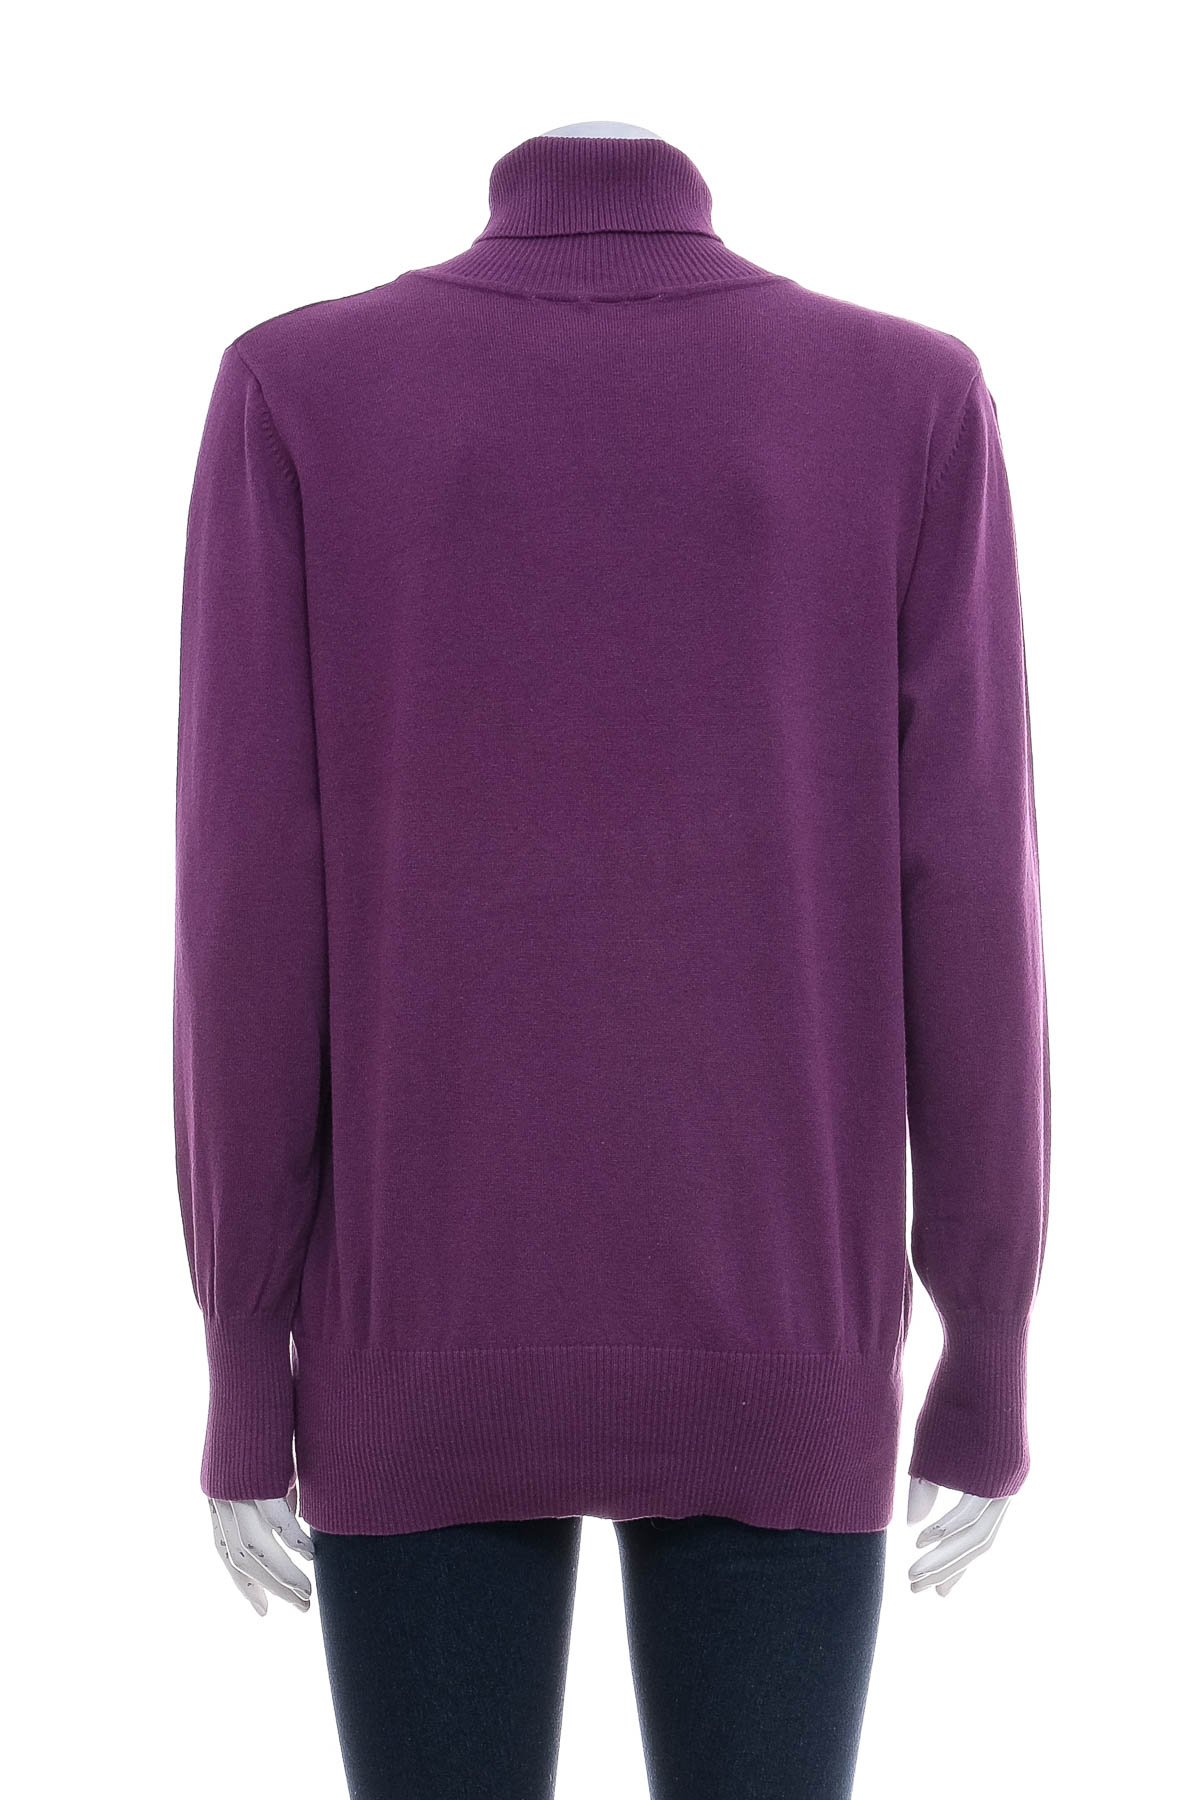 Women's sweater - Bpc Bonprix Collection - 1